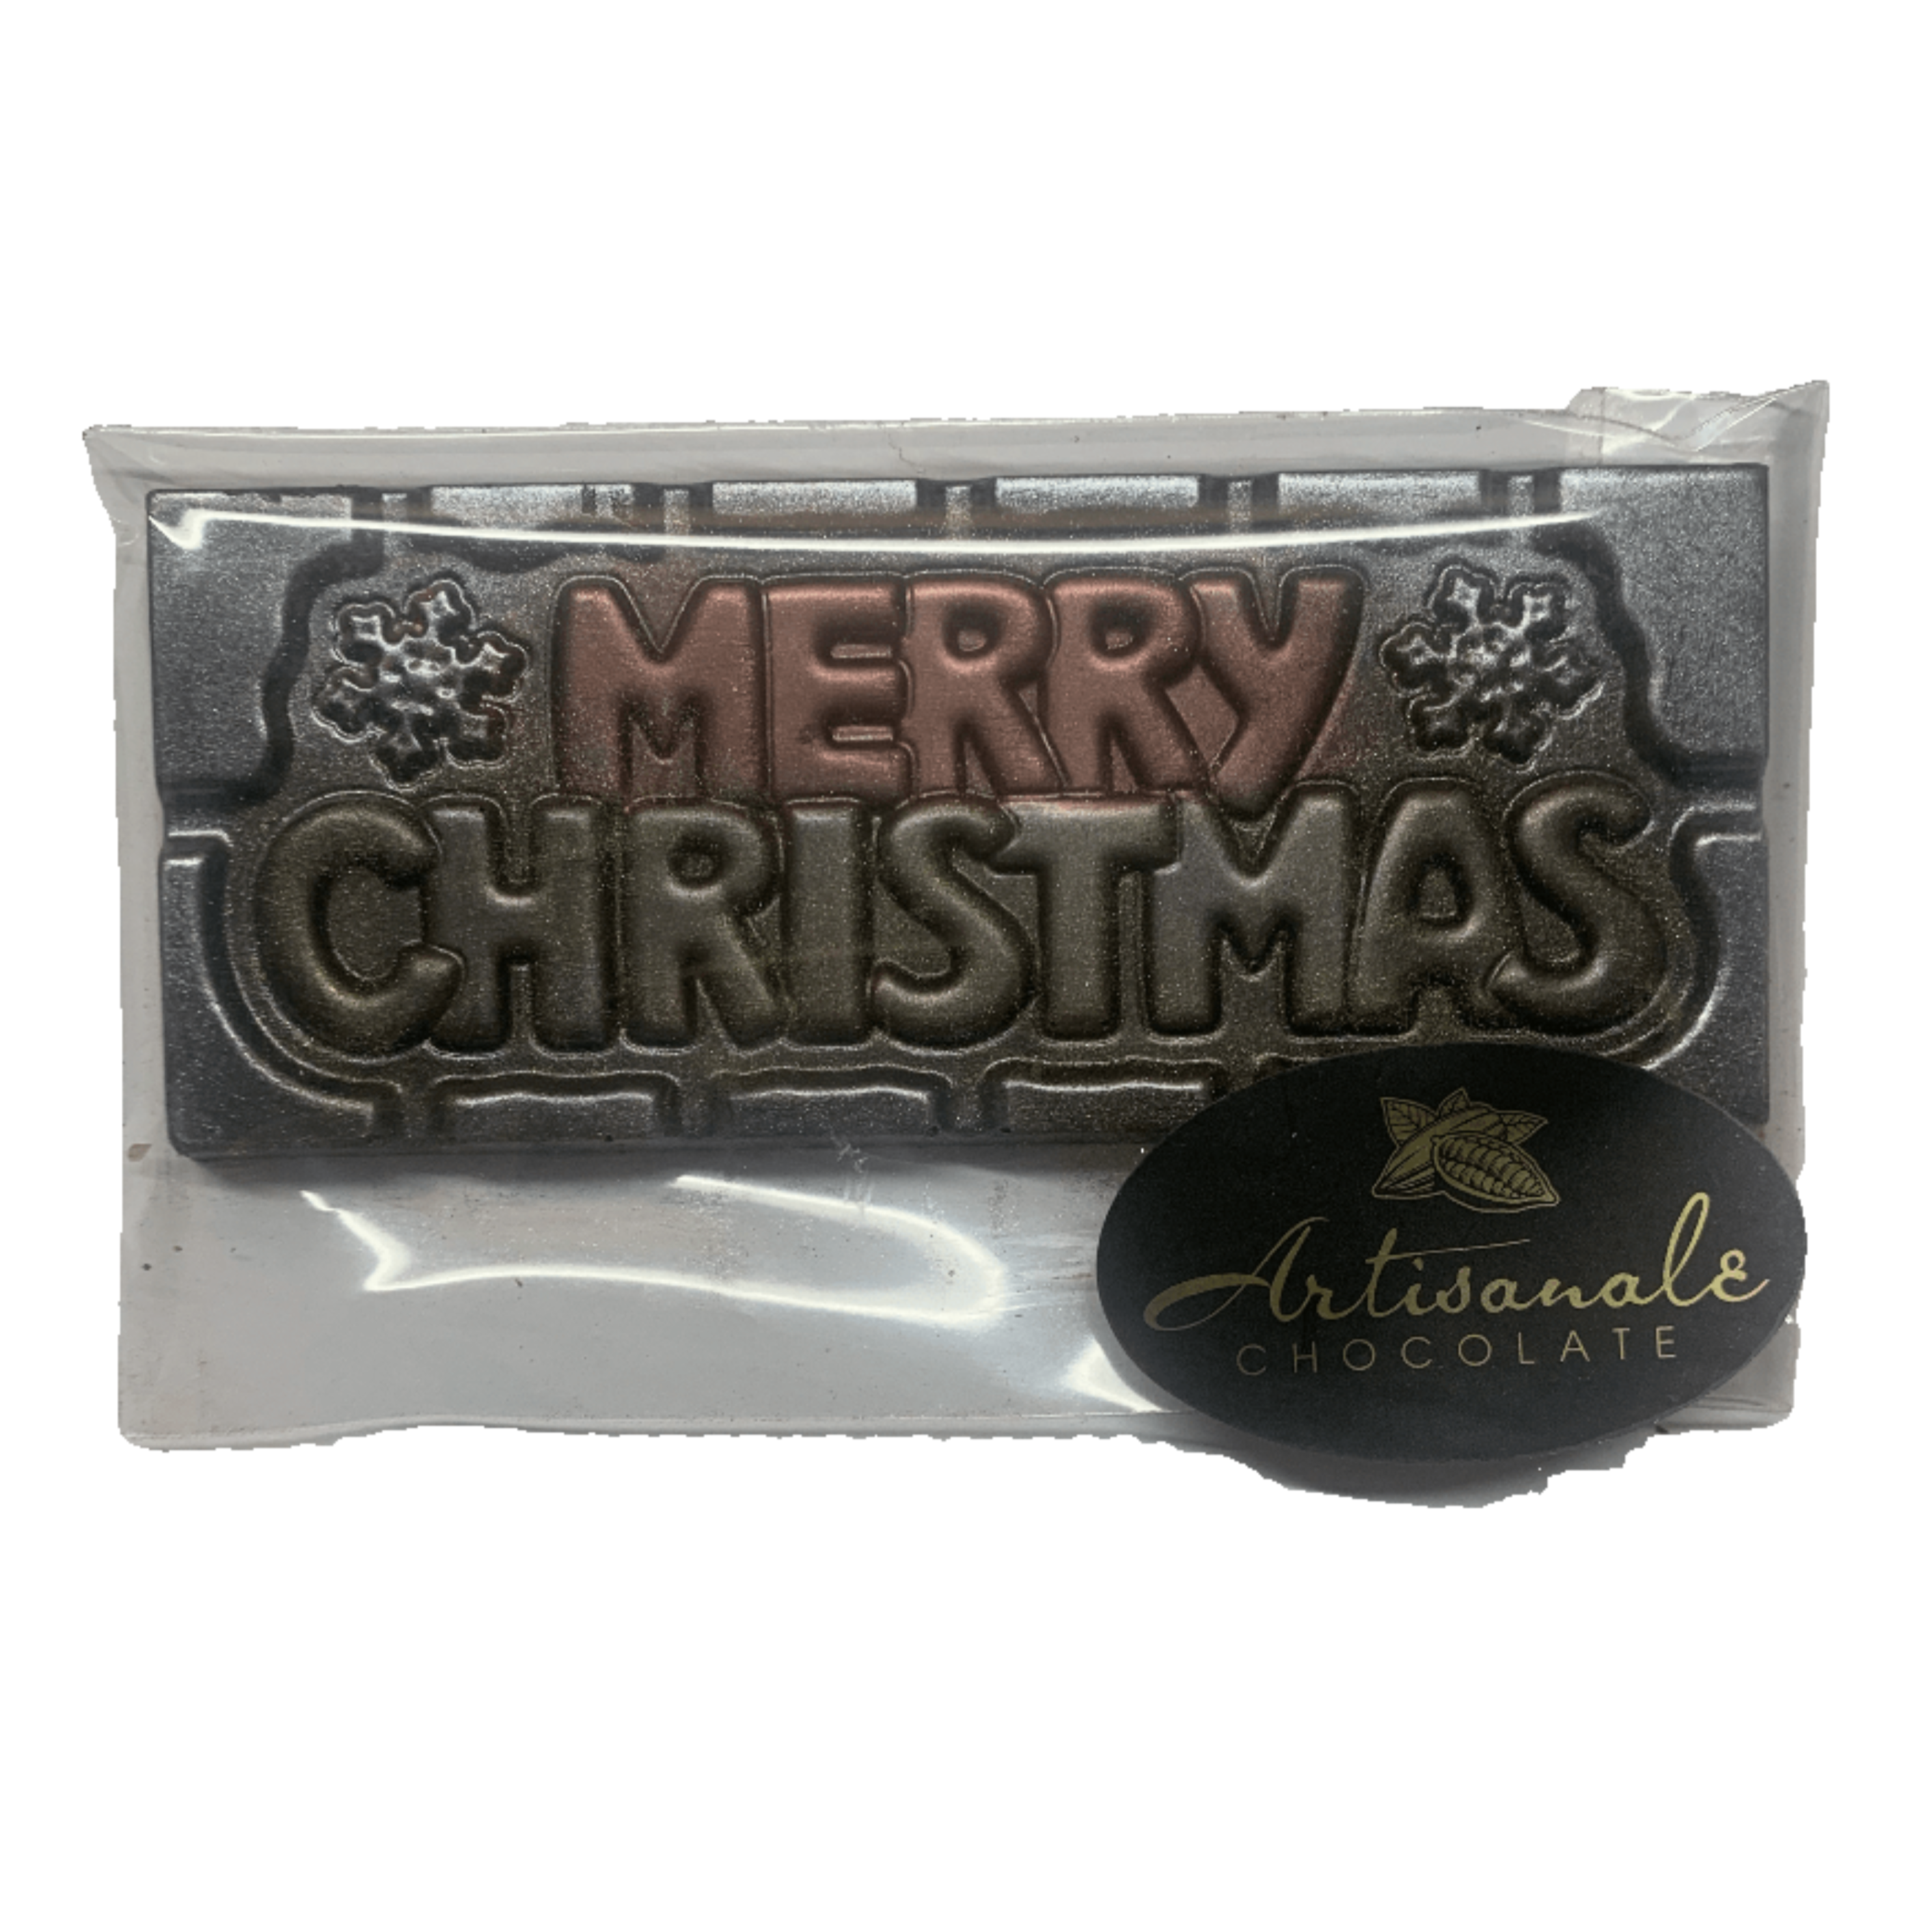 Merry Christmas - Dark or Milk Chocolate